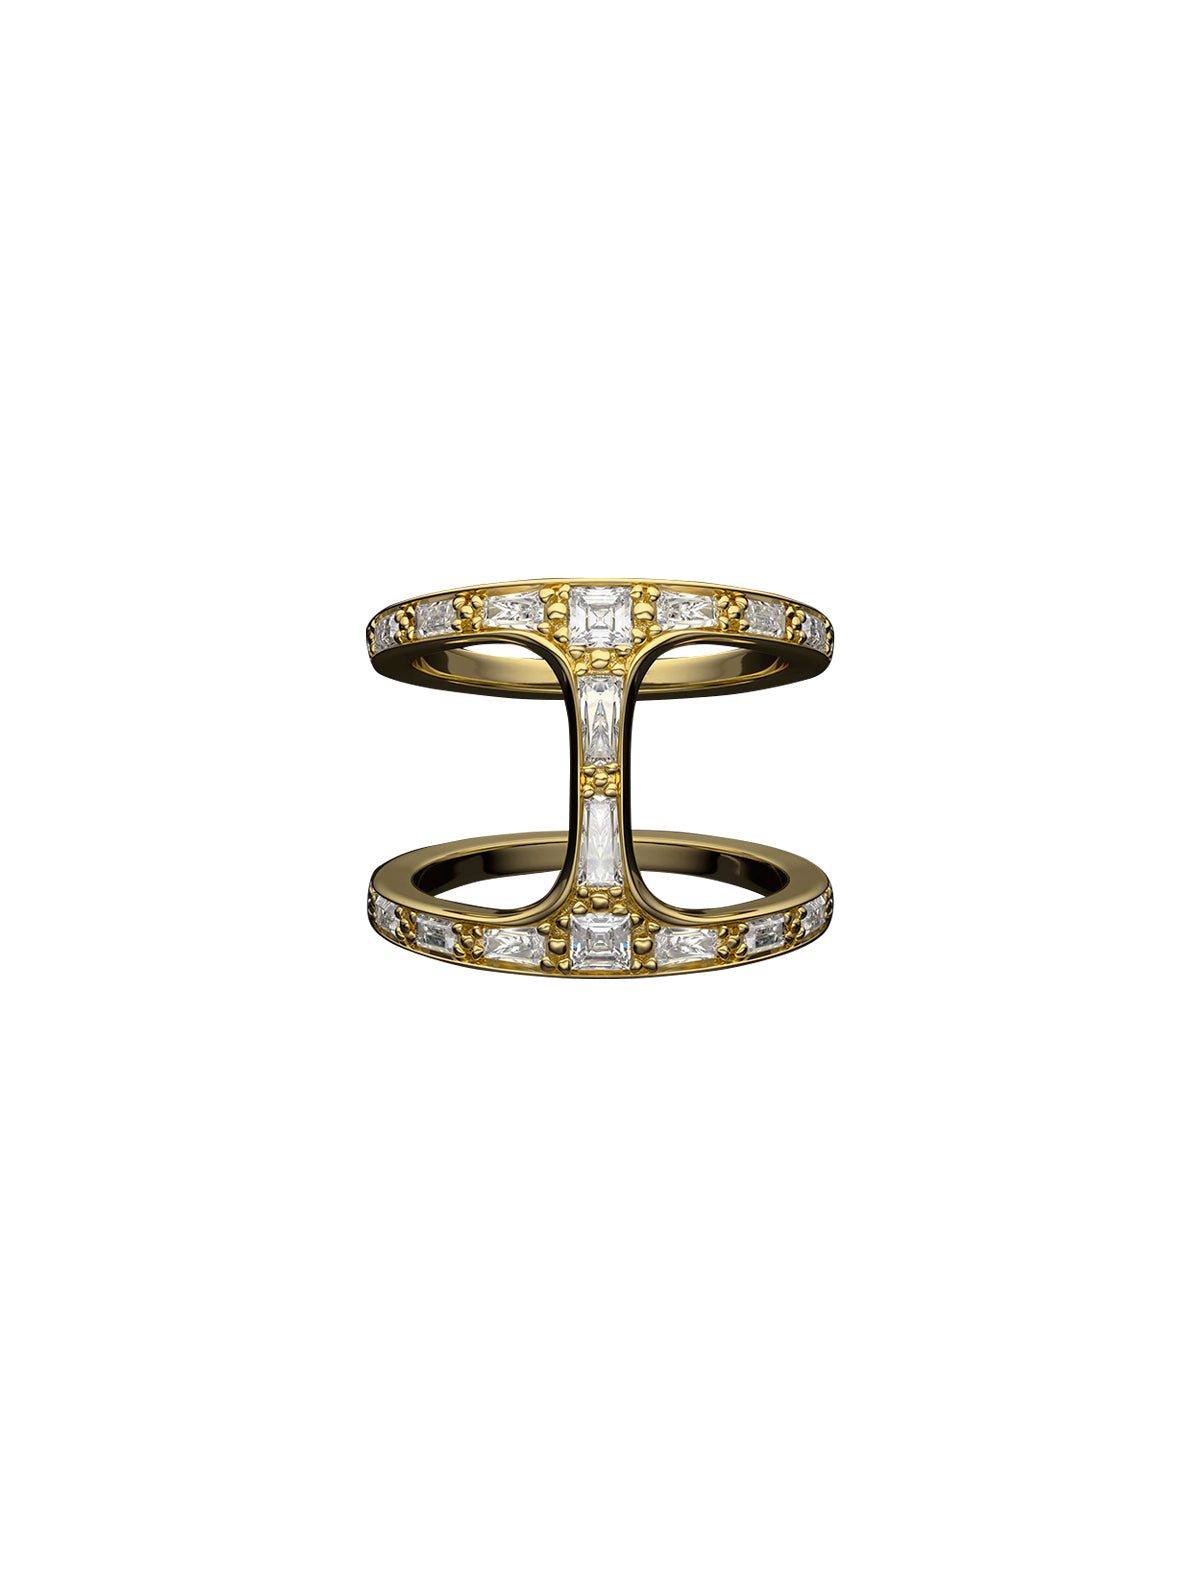 HOORSENBUHS Phantom with Baguette Diamonds Ring 18k Yellow Gold